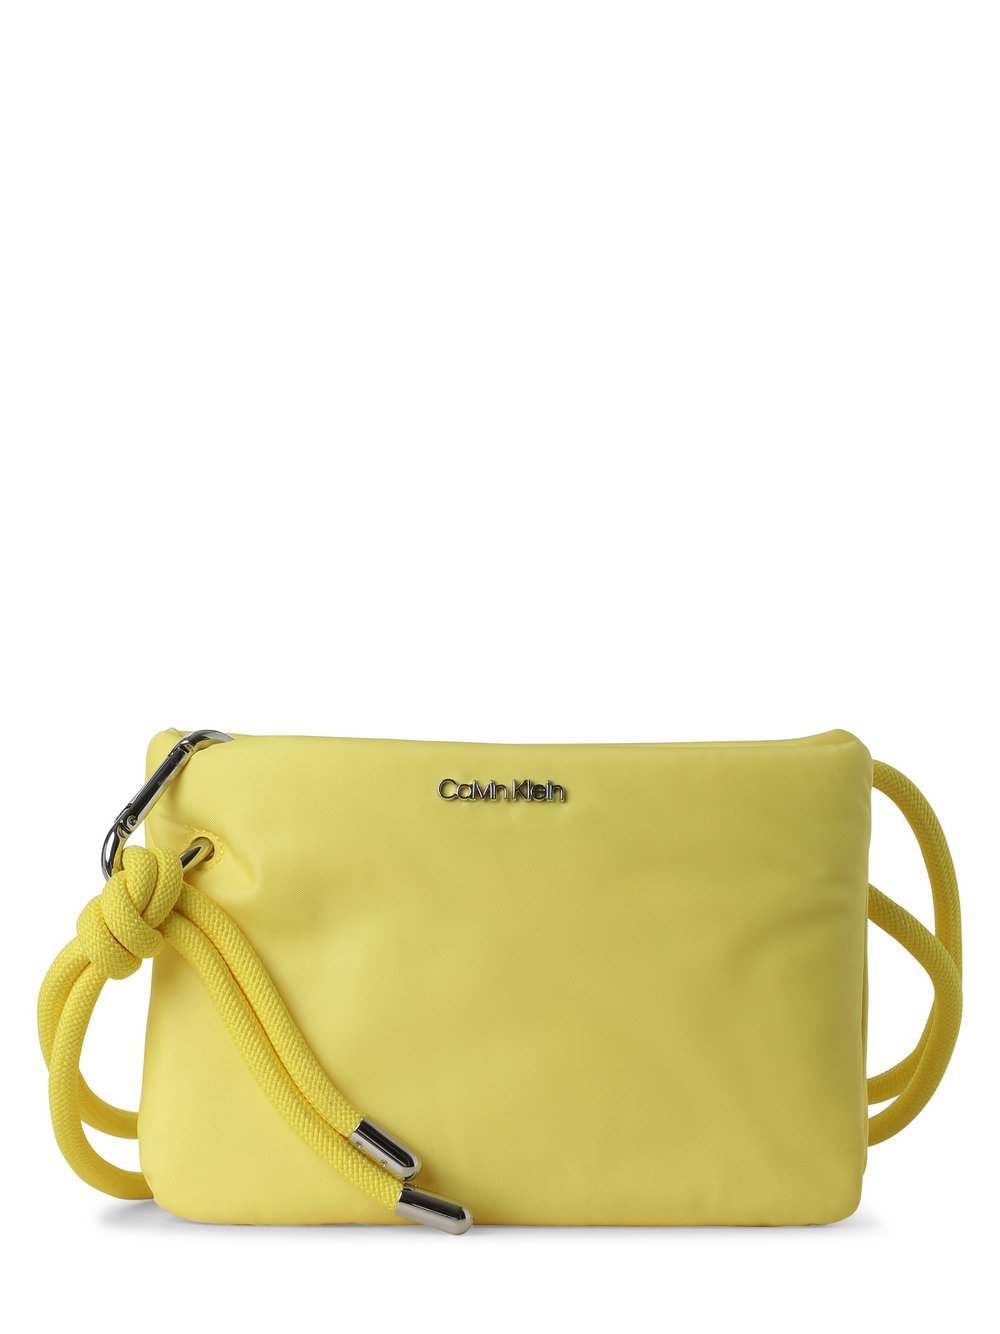 Calvin Klein - Torebka damska, żółty